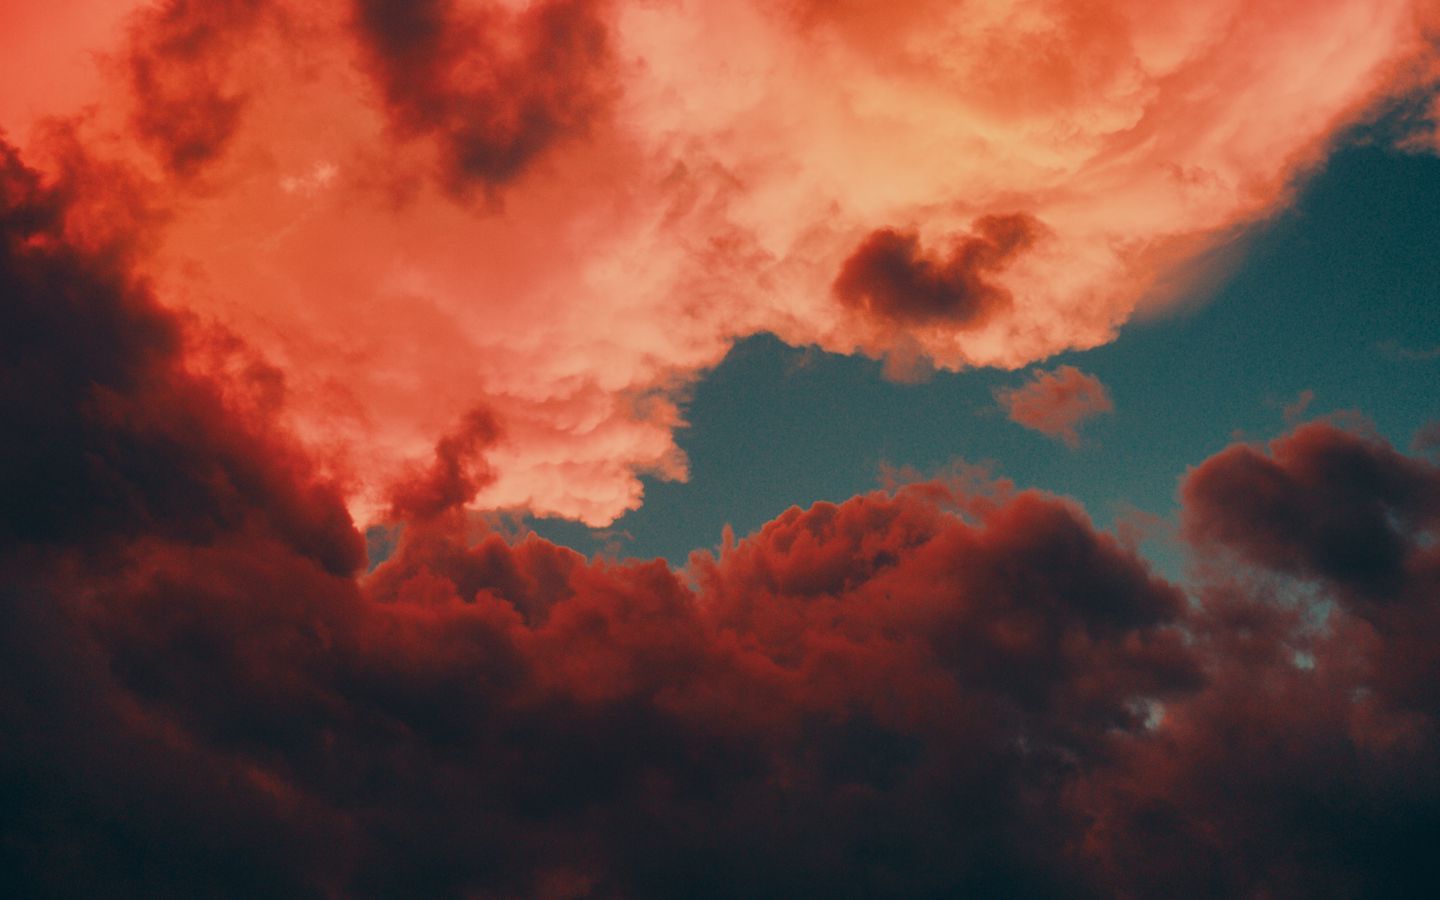 A red sky with clouds - Dark orange, 1440x900